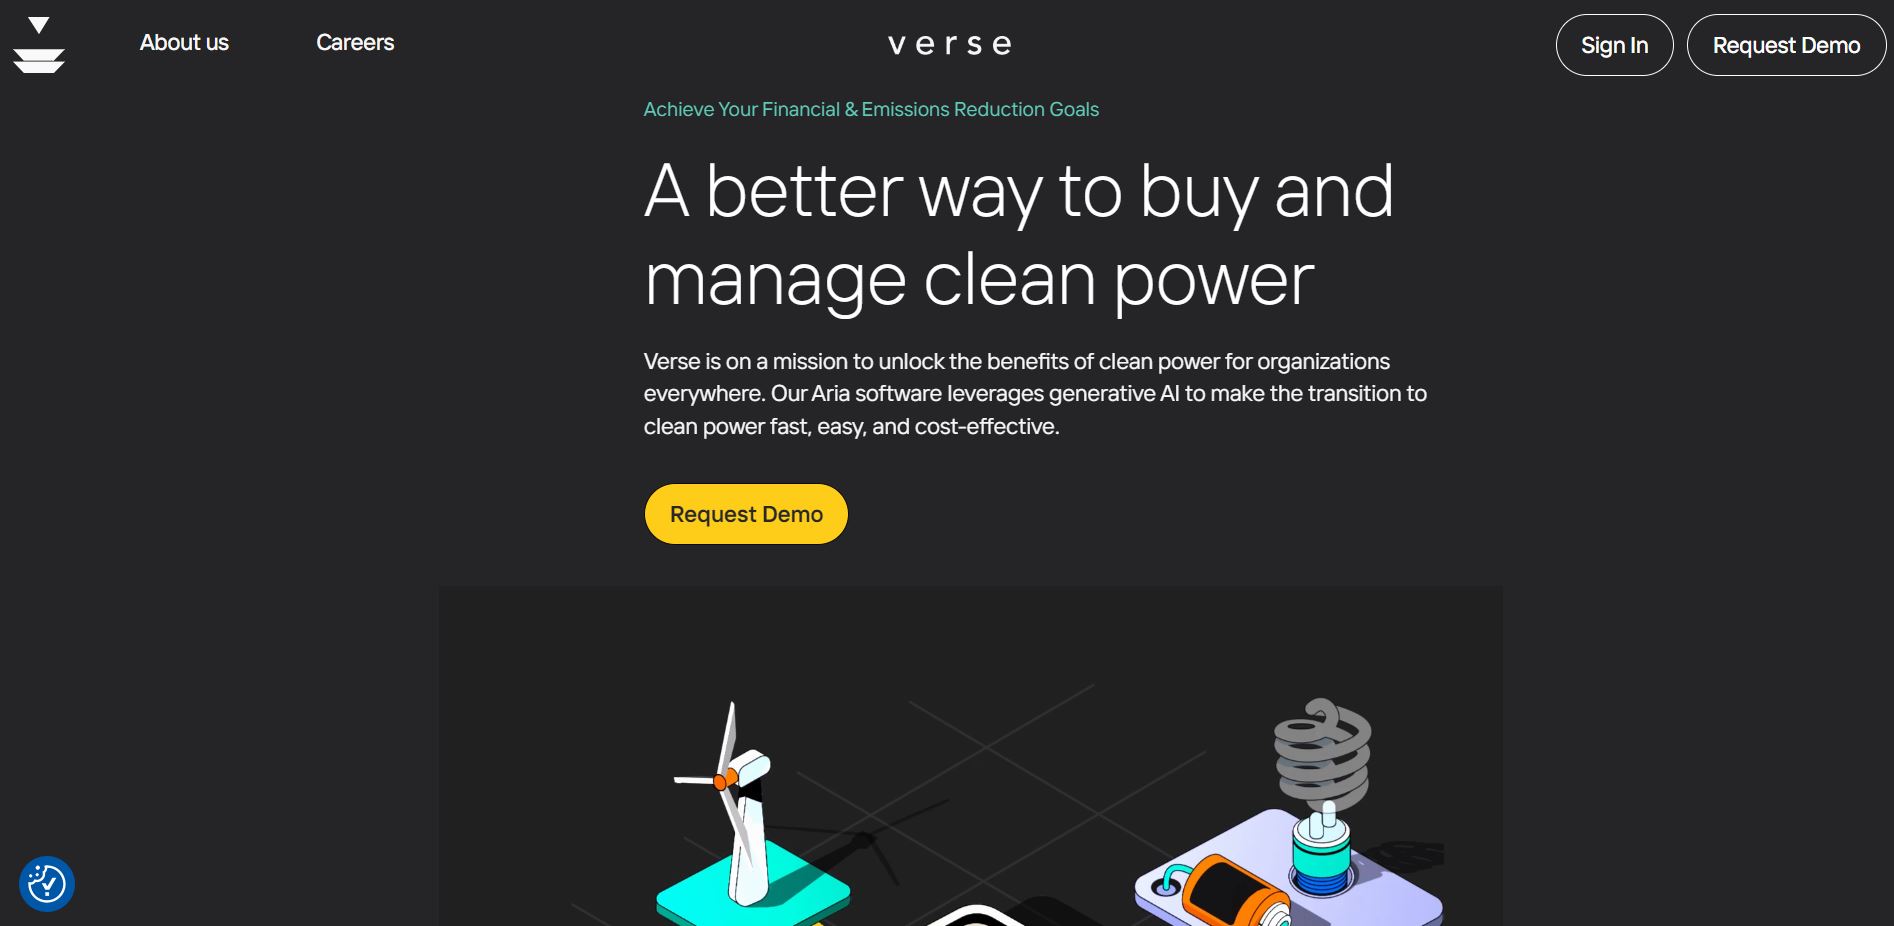 Verse: San Francisco-based startup revolutionizing renewable energy services, raised $5.75M seed funding